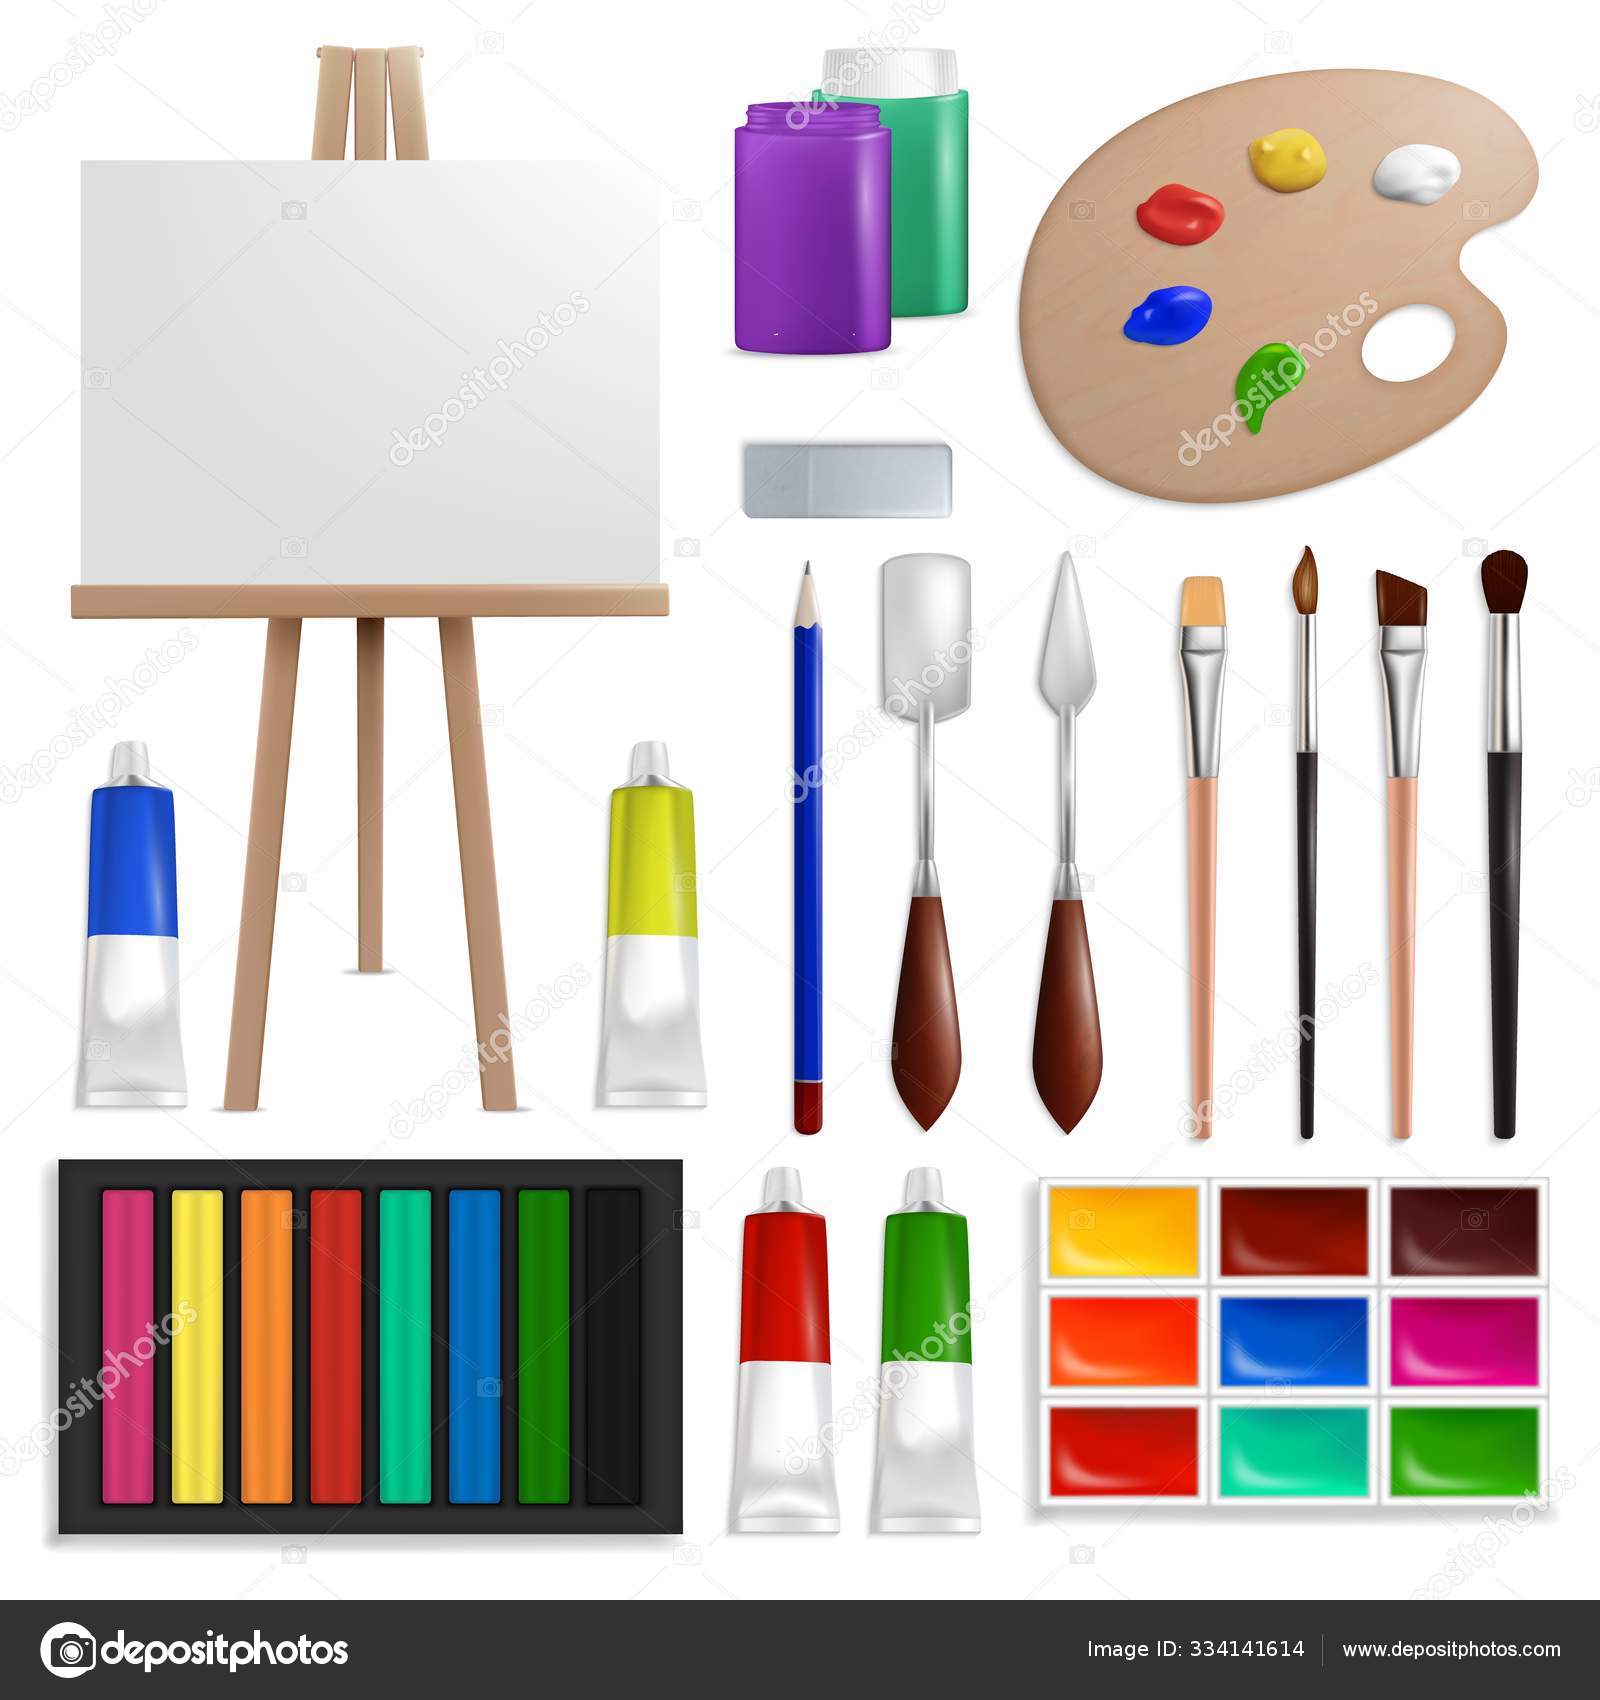 https://st3.depositphotos.com/5524162/33414/v/1600/depositphotos_334141614-stock-illustration-art-painting-tools-and-accessories.jpg